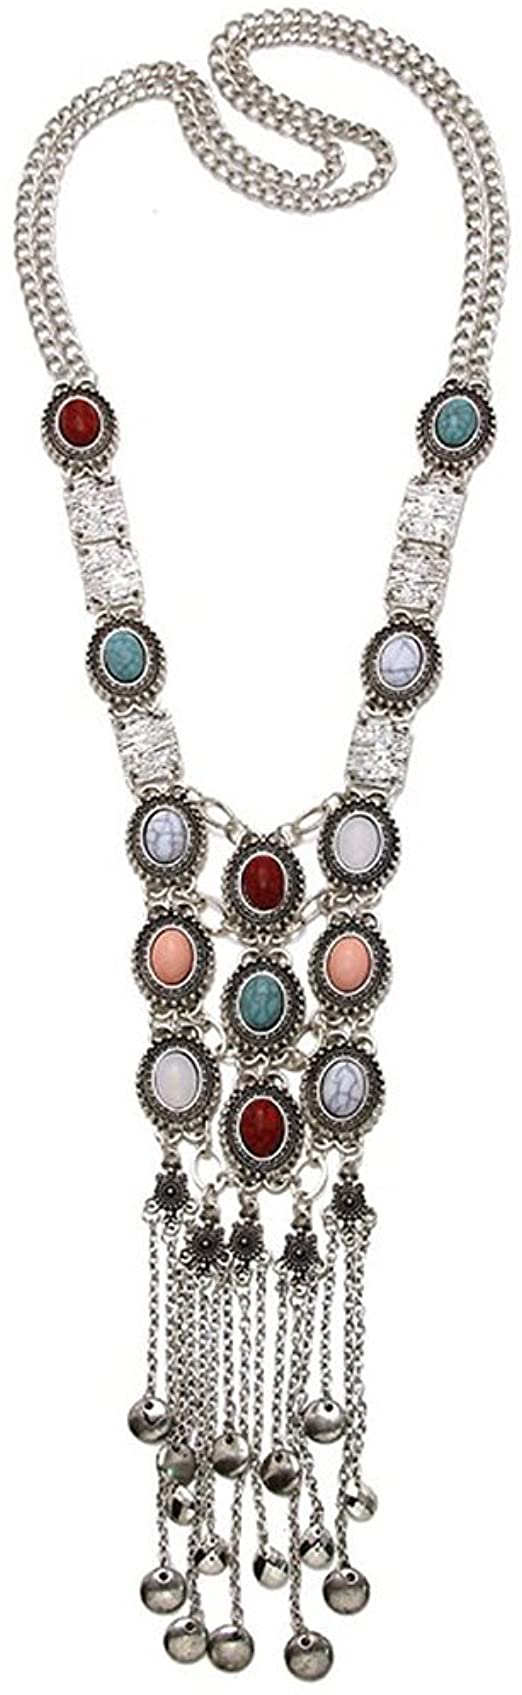 Turquoise Long Boho Bohemian Statement Ethnic Tribal Necklace for Women Vintage Retro Rhinestone (Silver)